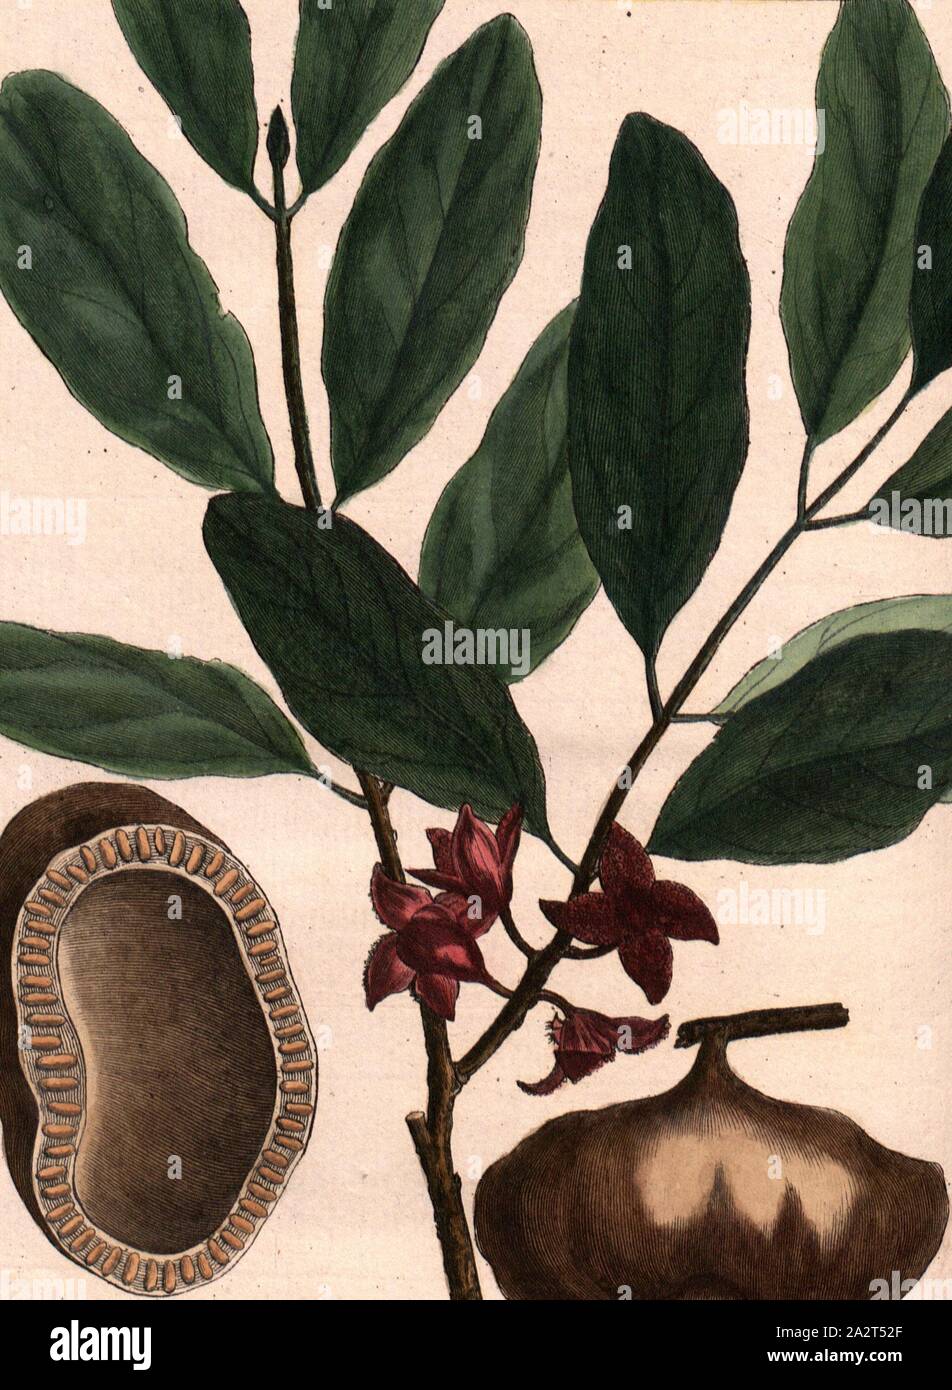 Drum wood, Flowers and fruit of the Drum Tree (Tambourissa quadrifida, Monimia Family), Signed: P. Sonnerat pinx, Milsan sculp, Pl. 134, before p. 237 (Vol. 2), Sonnerat, Pierre M. (pinx.); Milsan (sculp.), 1782, Sonnerat, Pierre Stock Photo